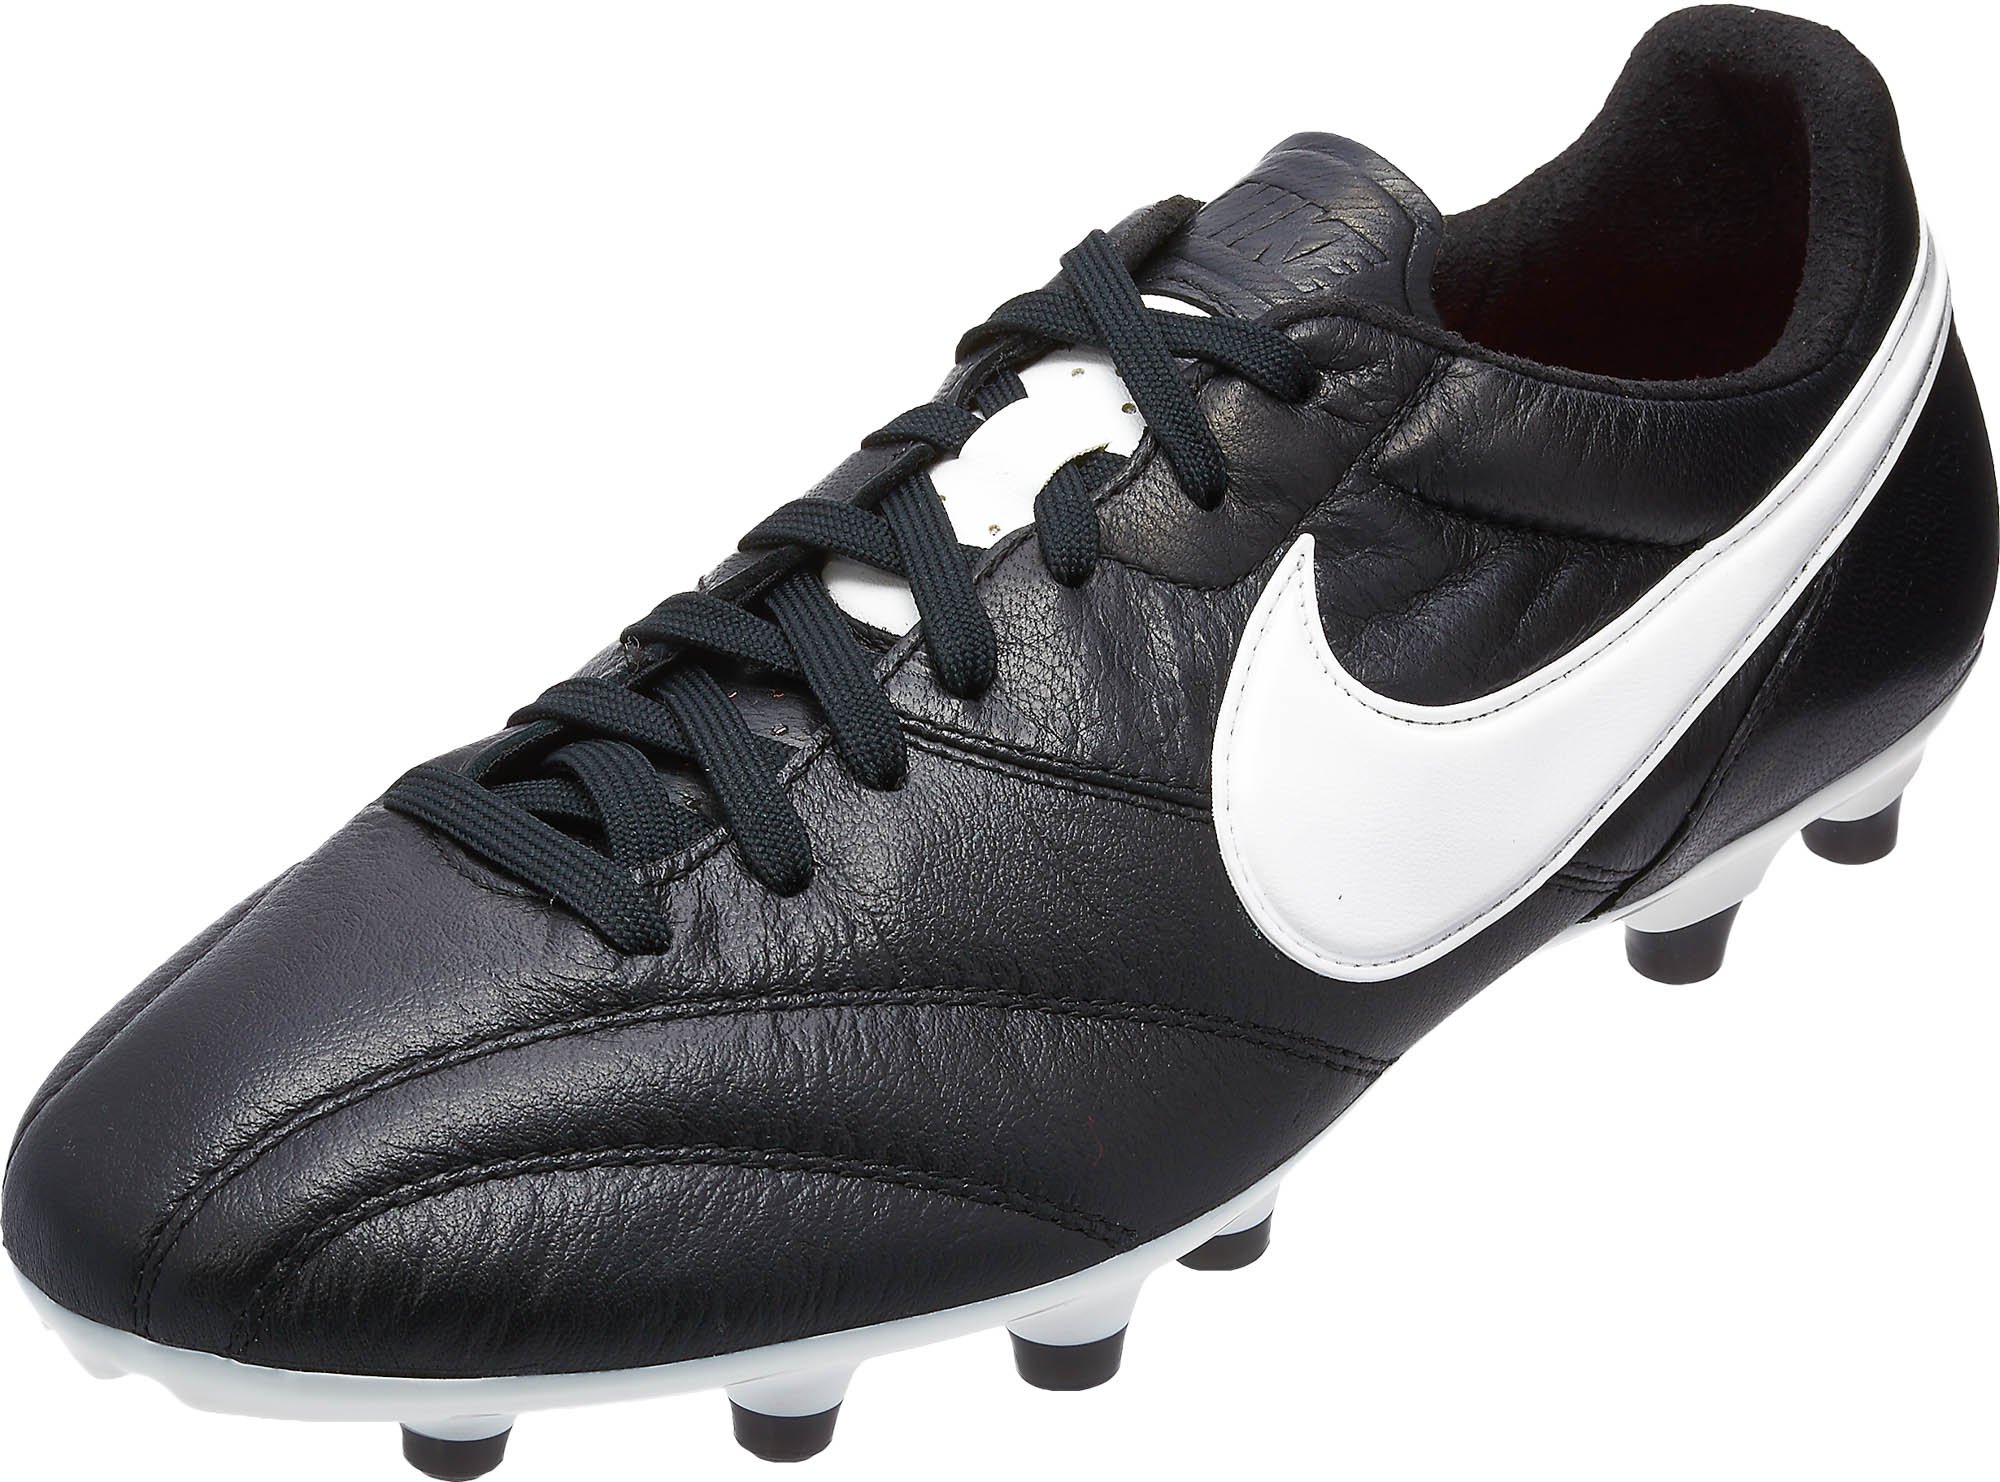 Black Nike Premier Soccer Cleats